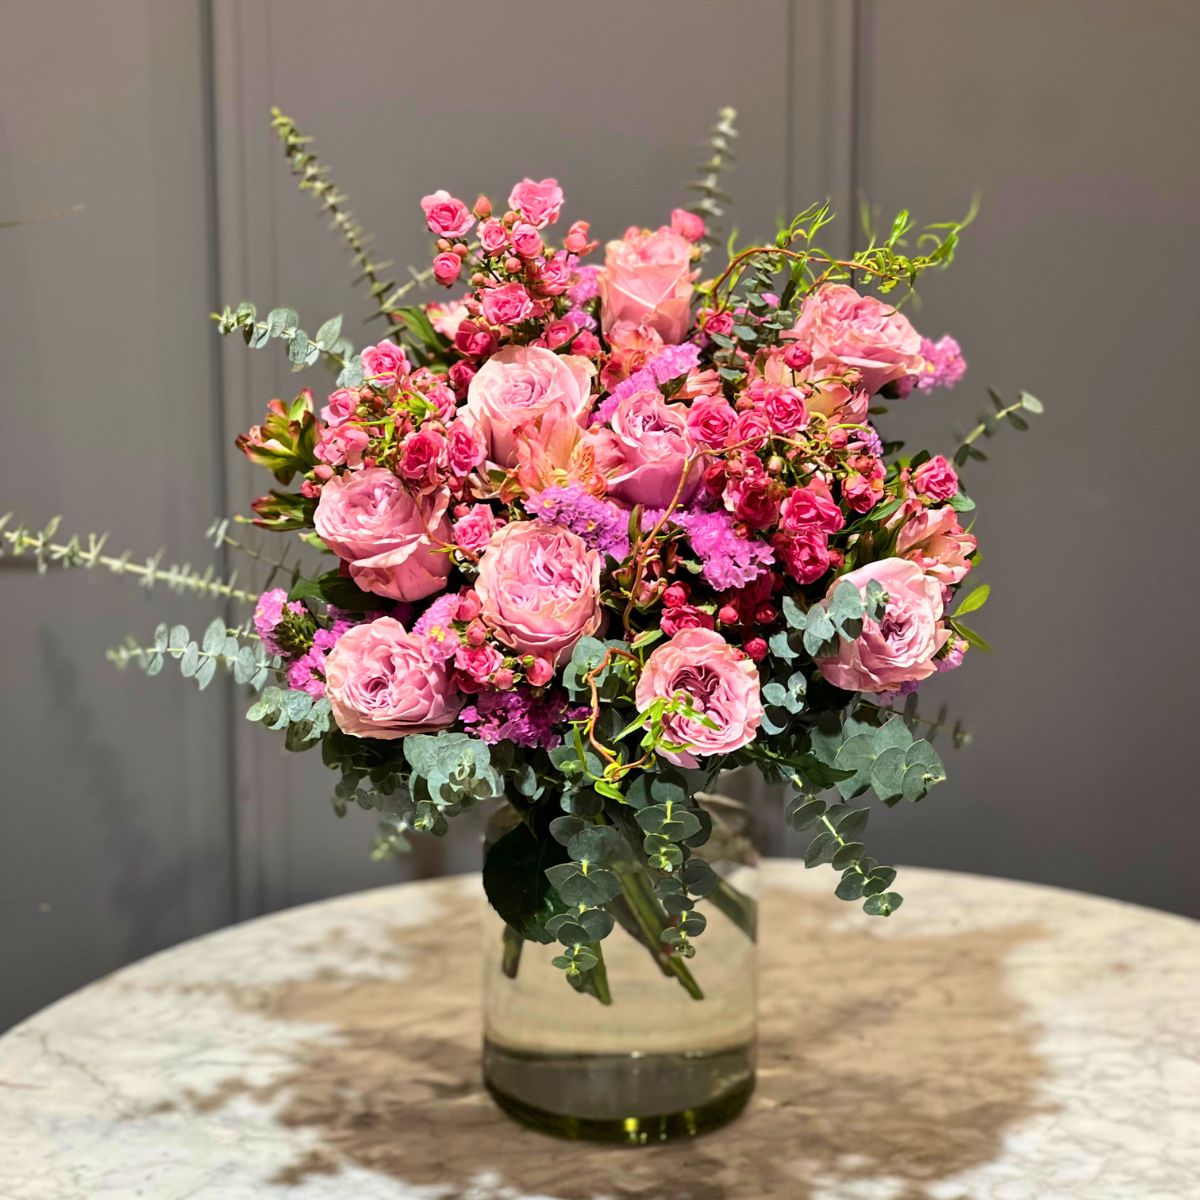 Mushegh Poghosyans arrangement using Wedding Day roses